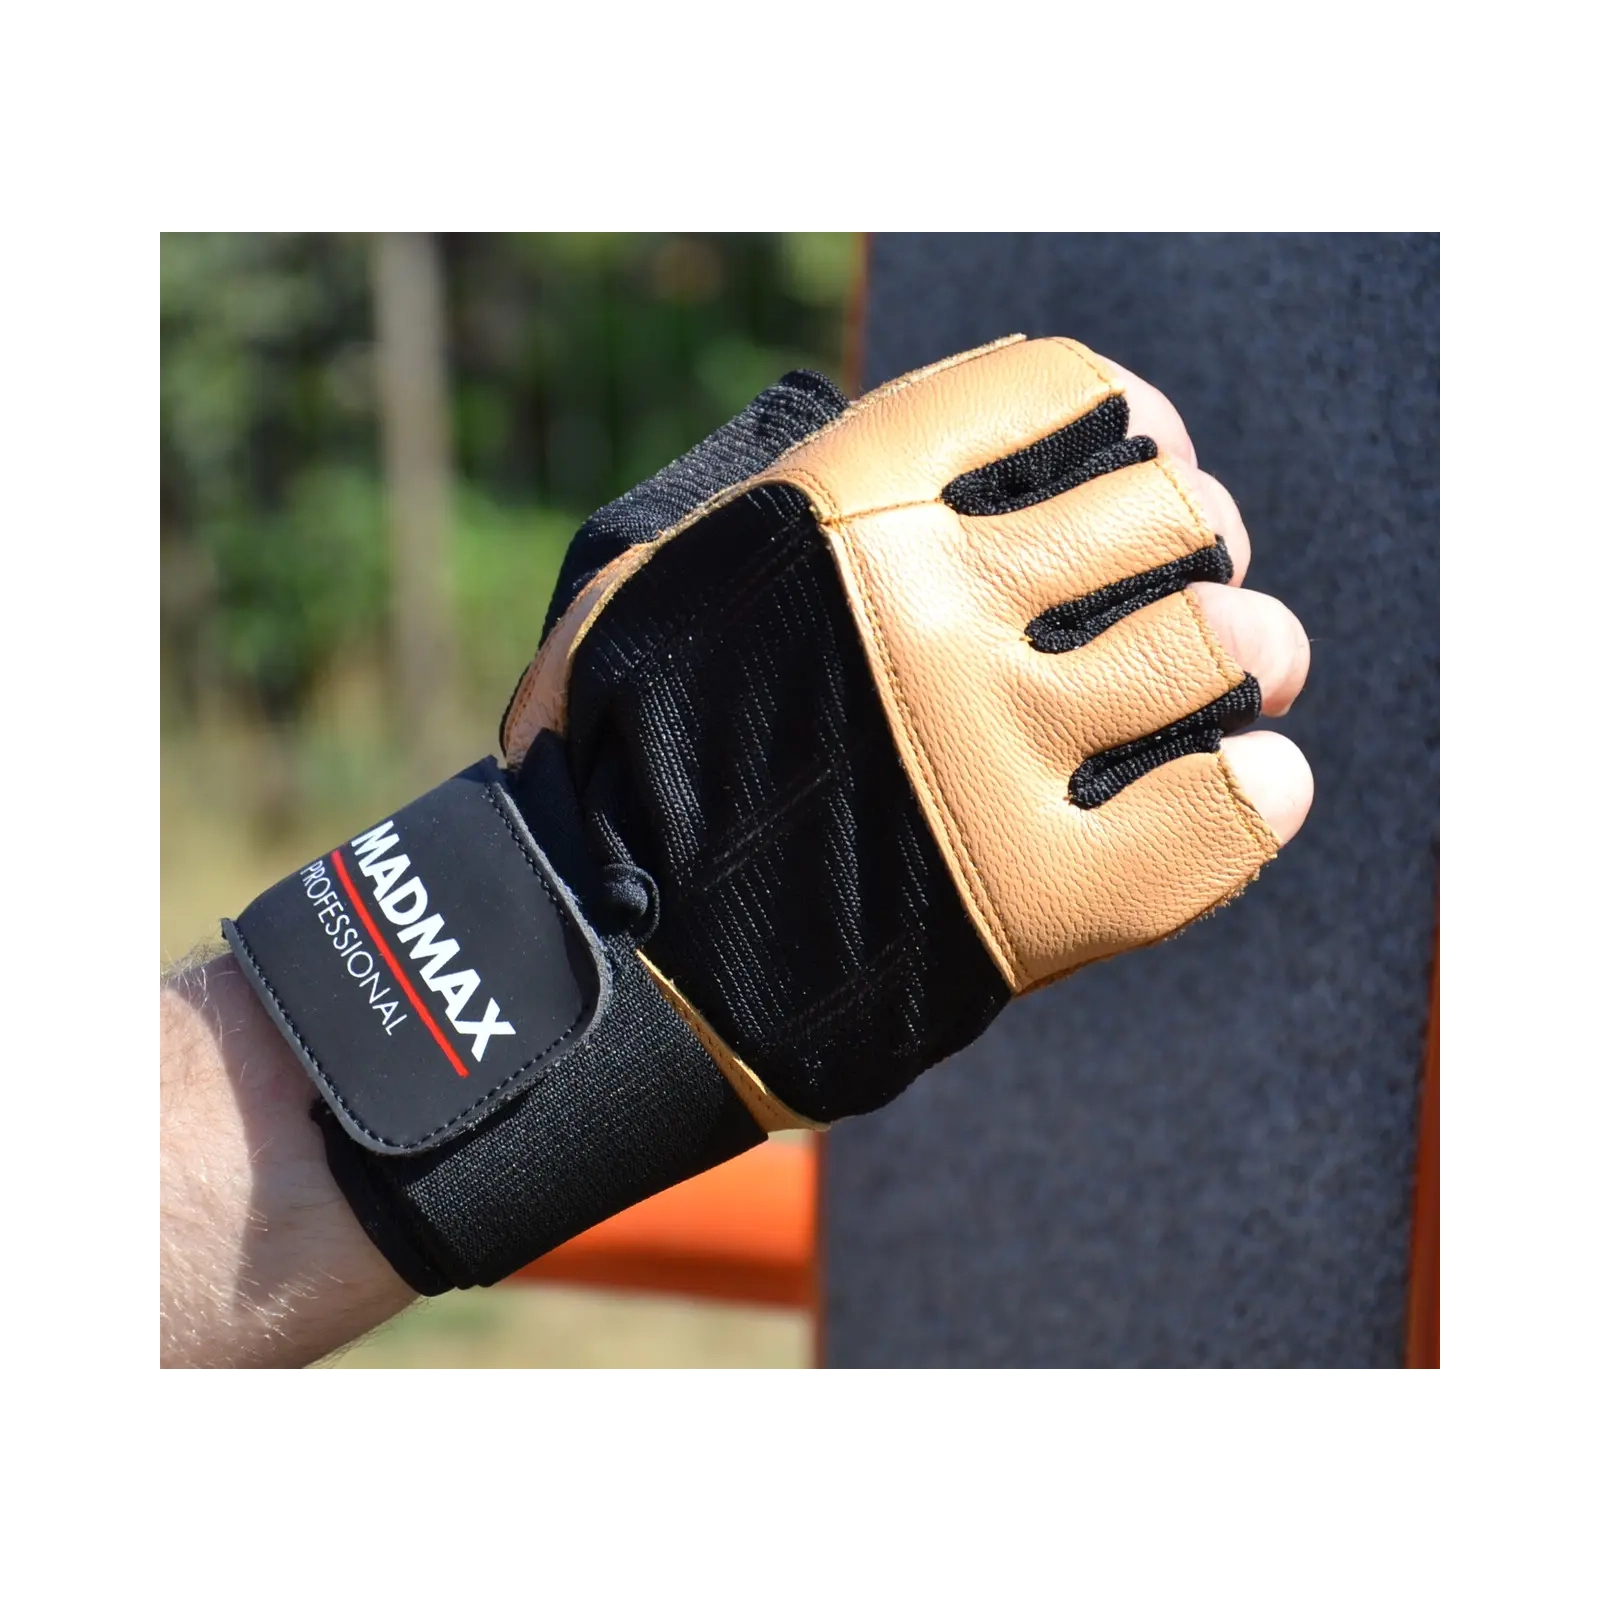 Перчатки для фитнеса MadMax MFG-269 Professional White XXL (MFG-269-White_XXL) изображение 3